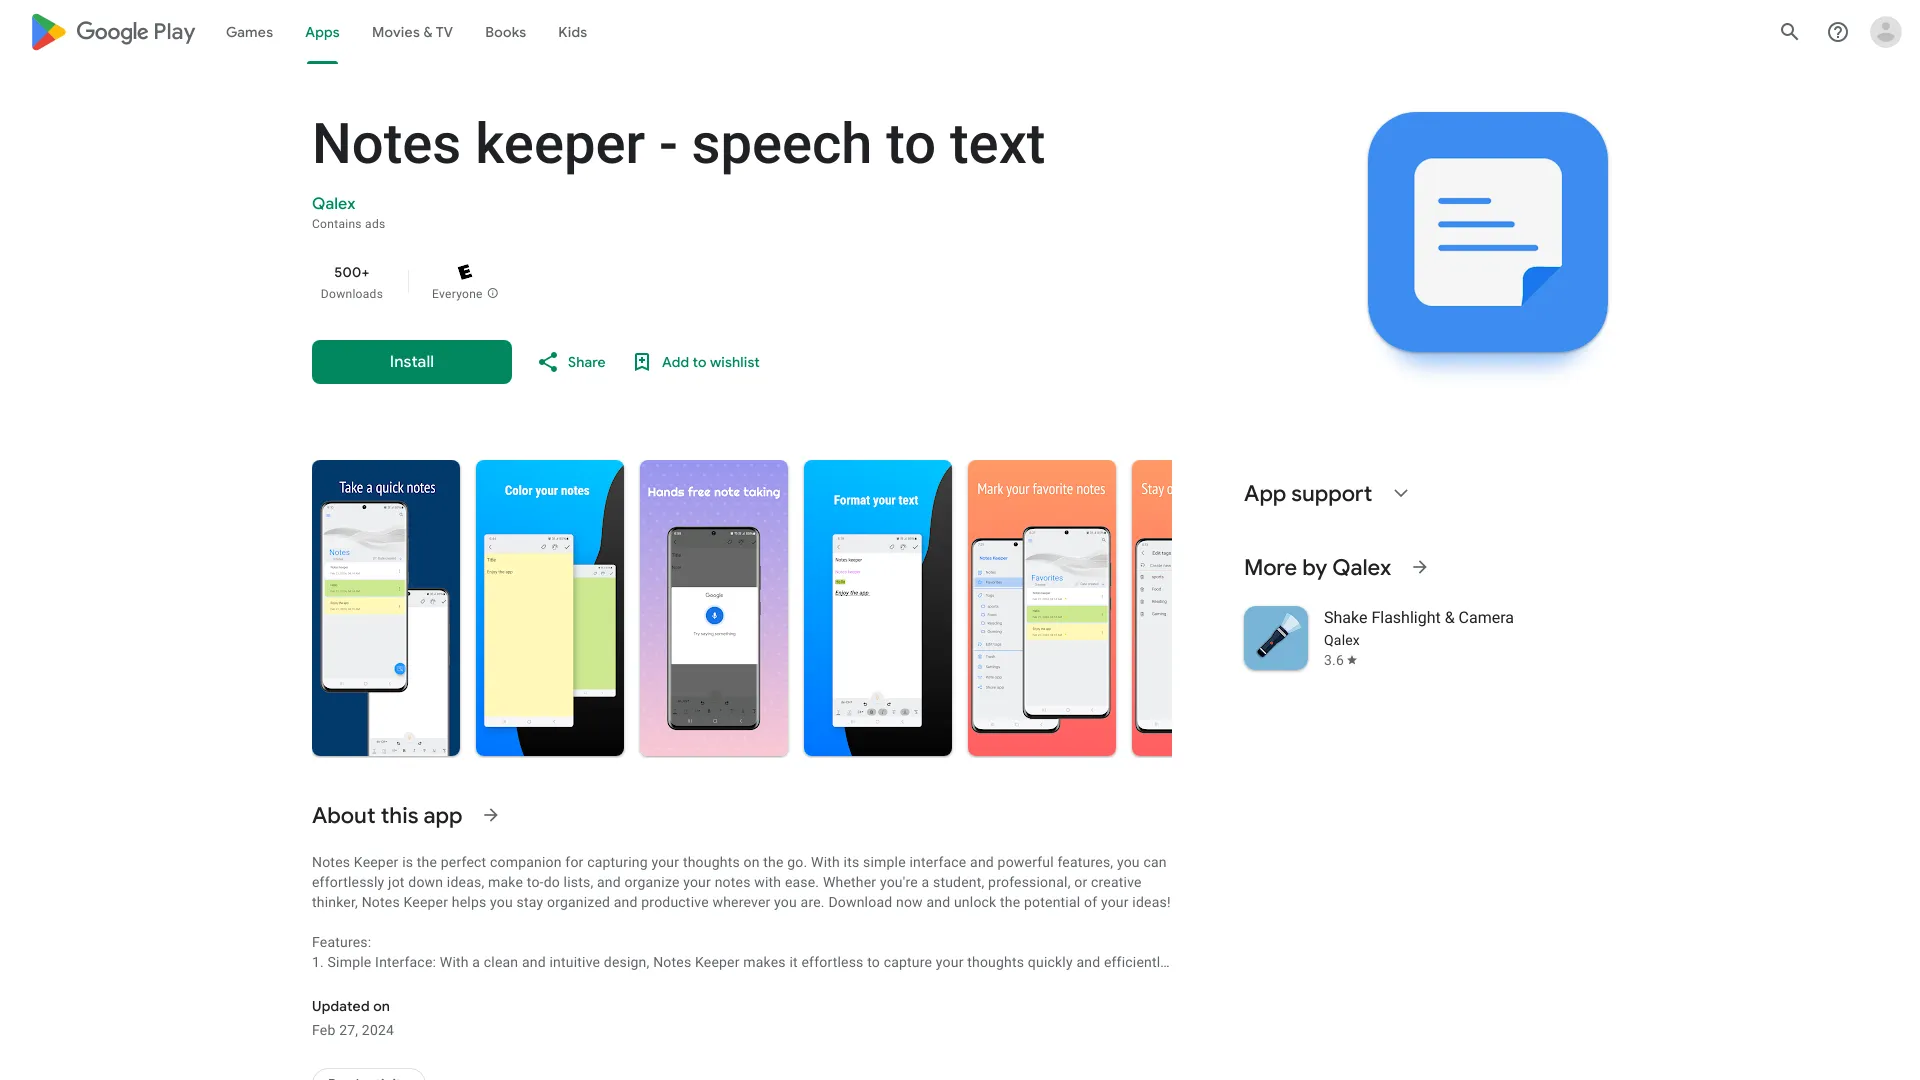 Notes keeper - speech to text